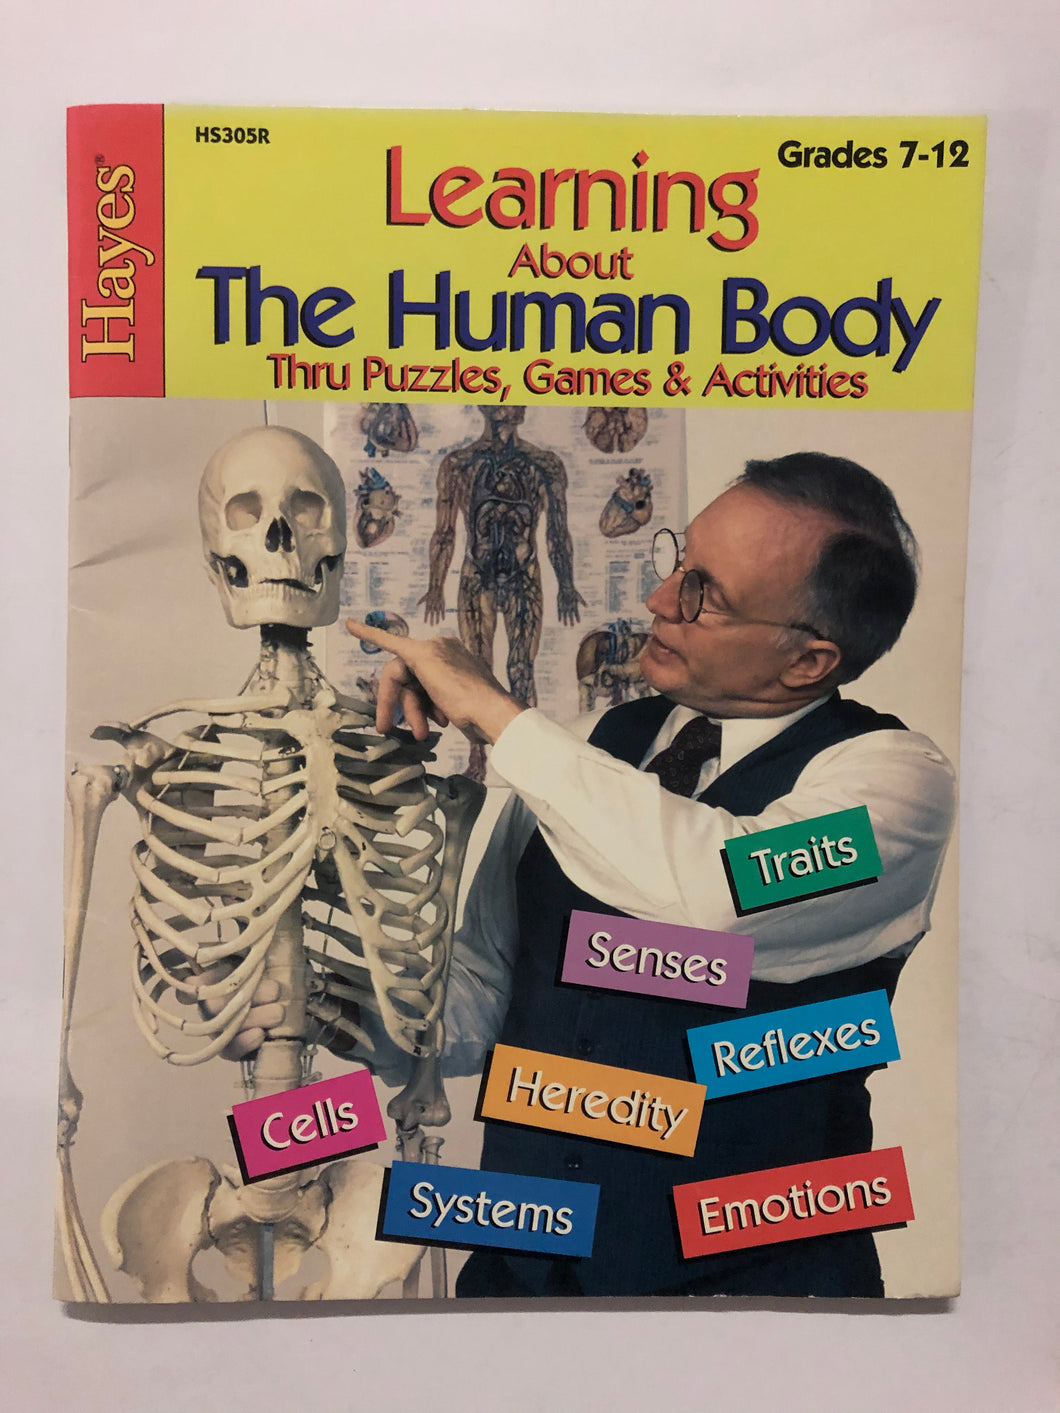 The Human Body | Grades 7-12